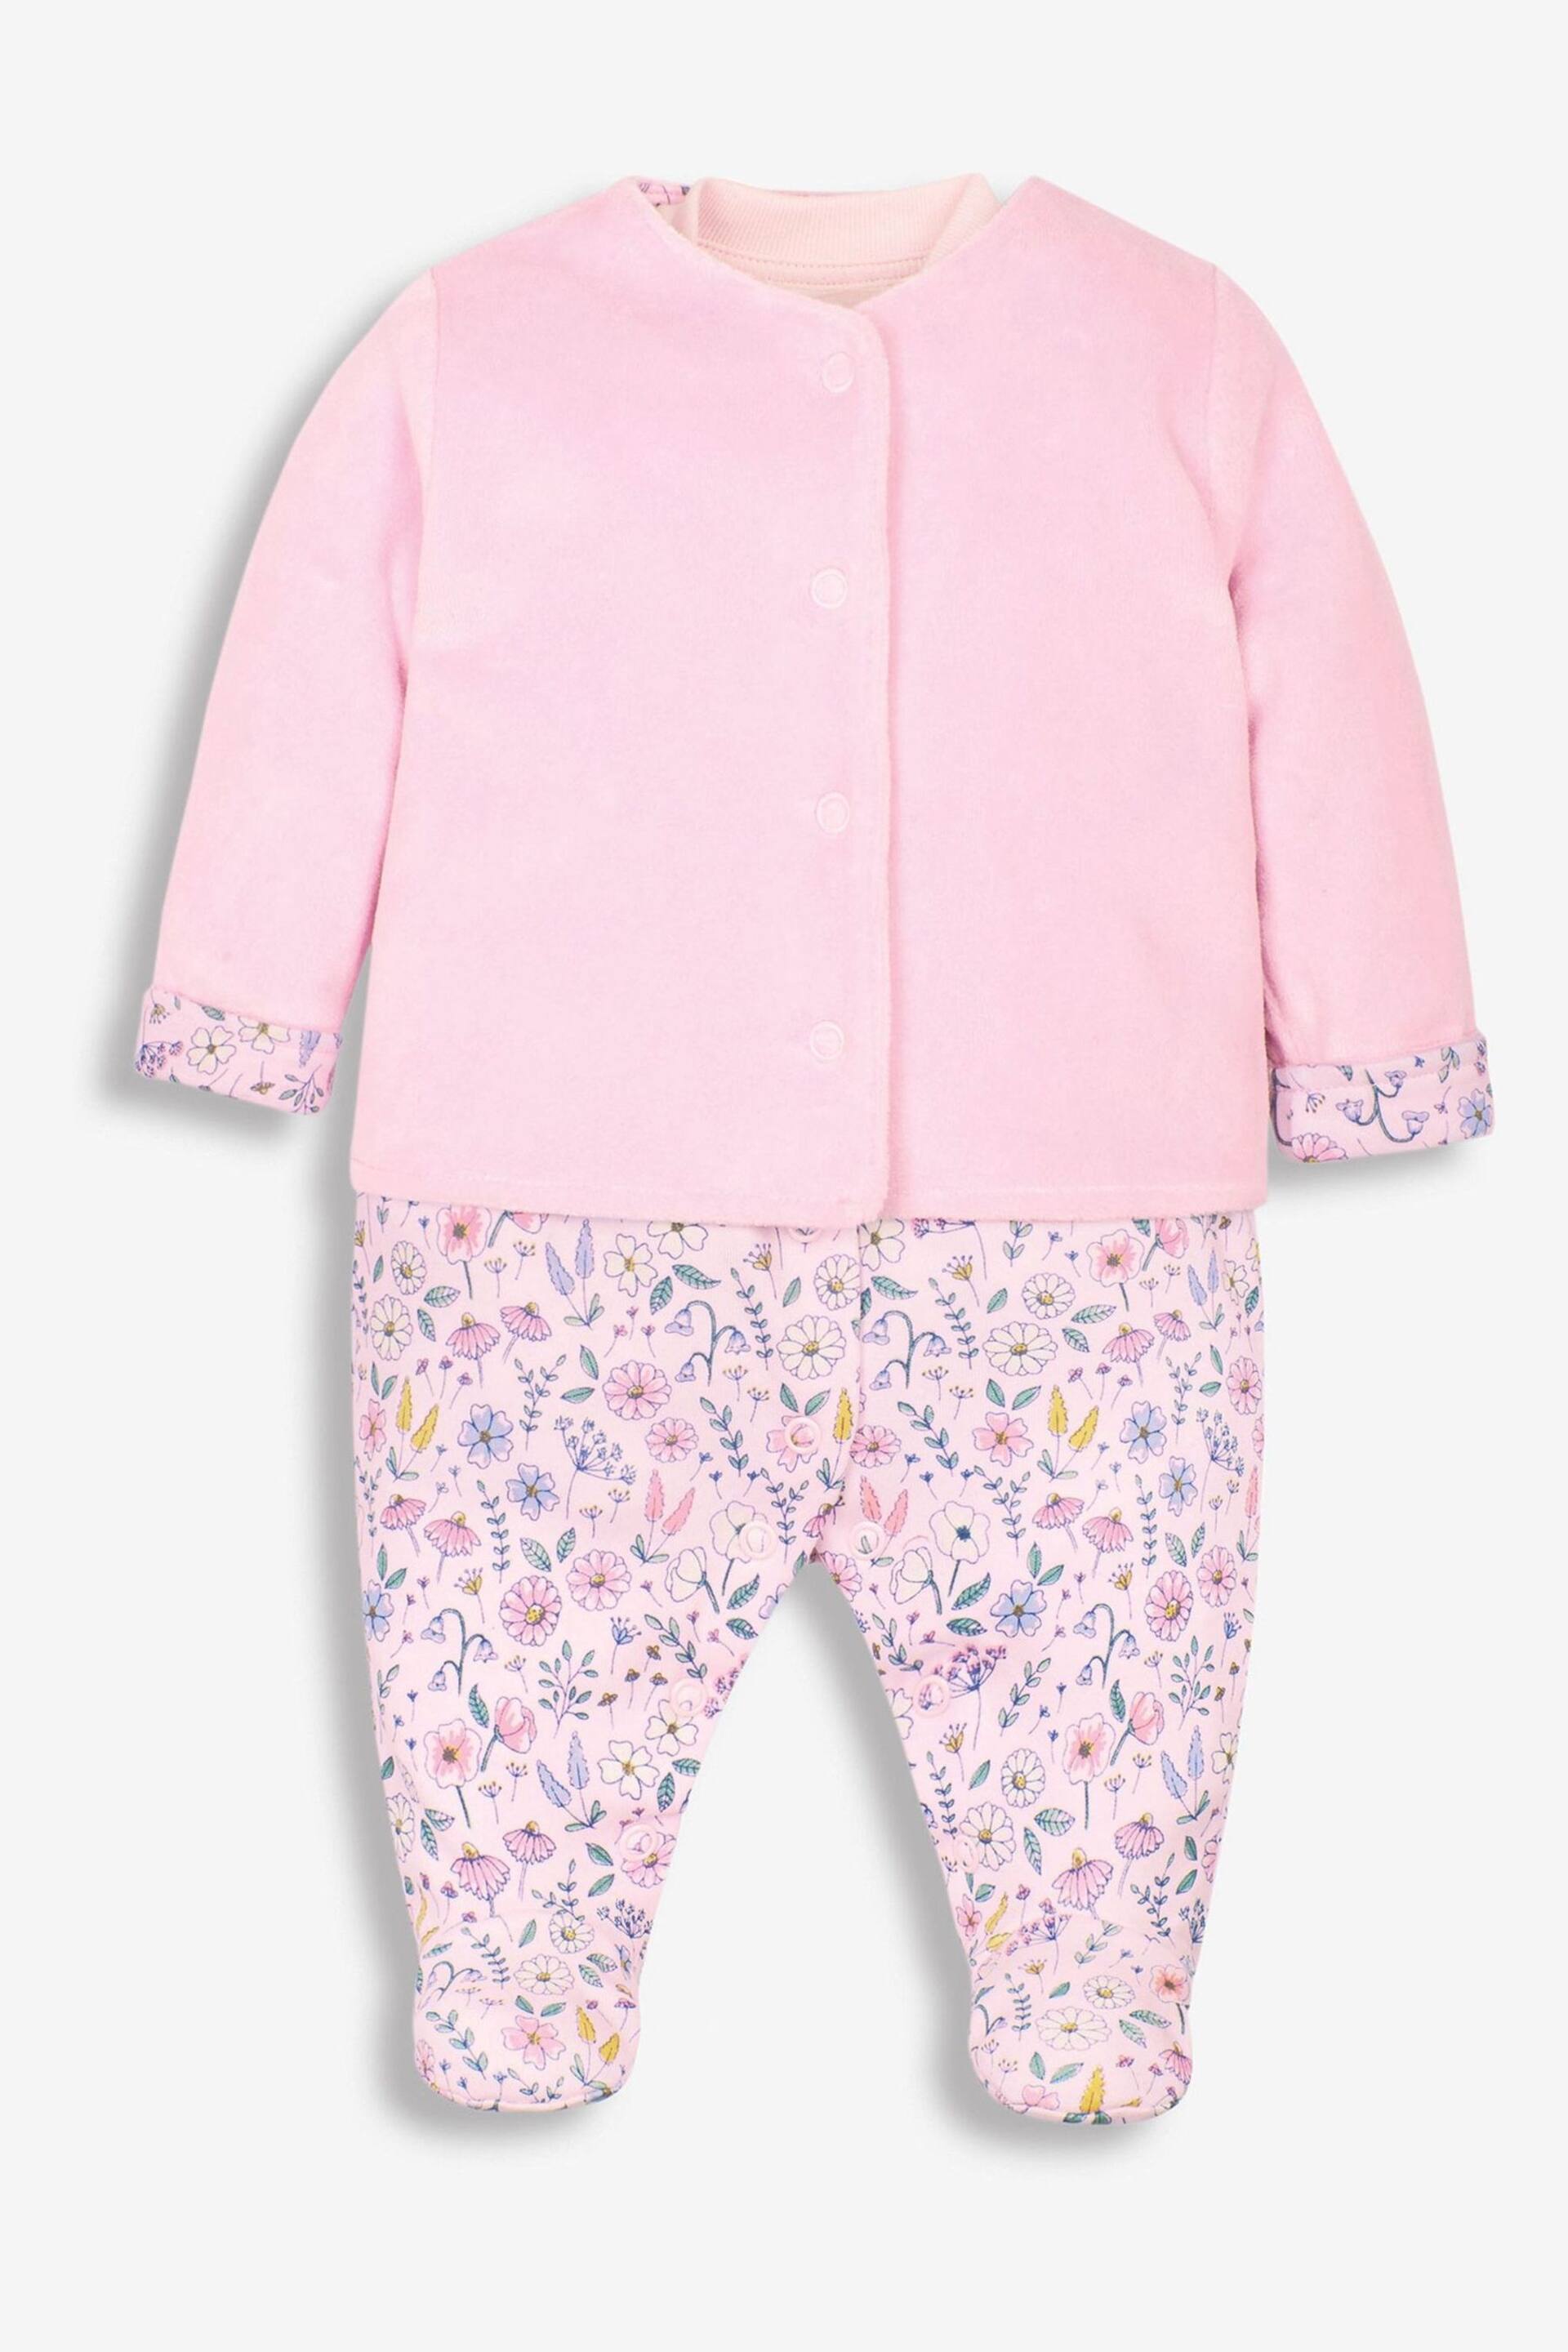 JoJo Maman Bébé Pink Floral 2-Piece Baby Sleepsuit & Velour Jacket Set - Image 3 of 9